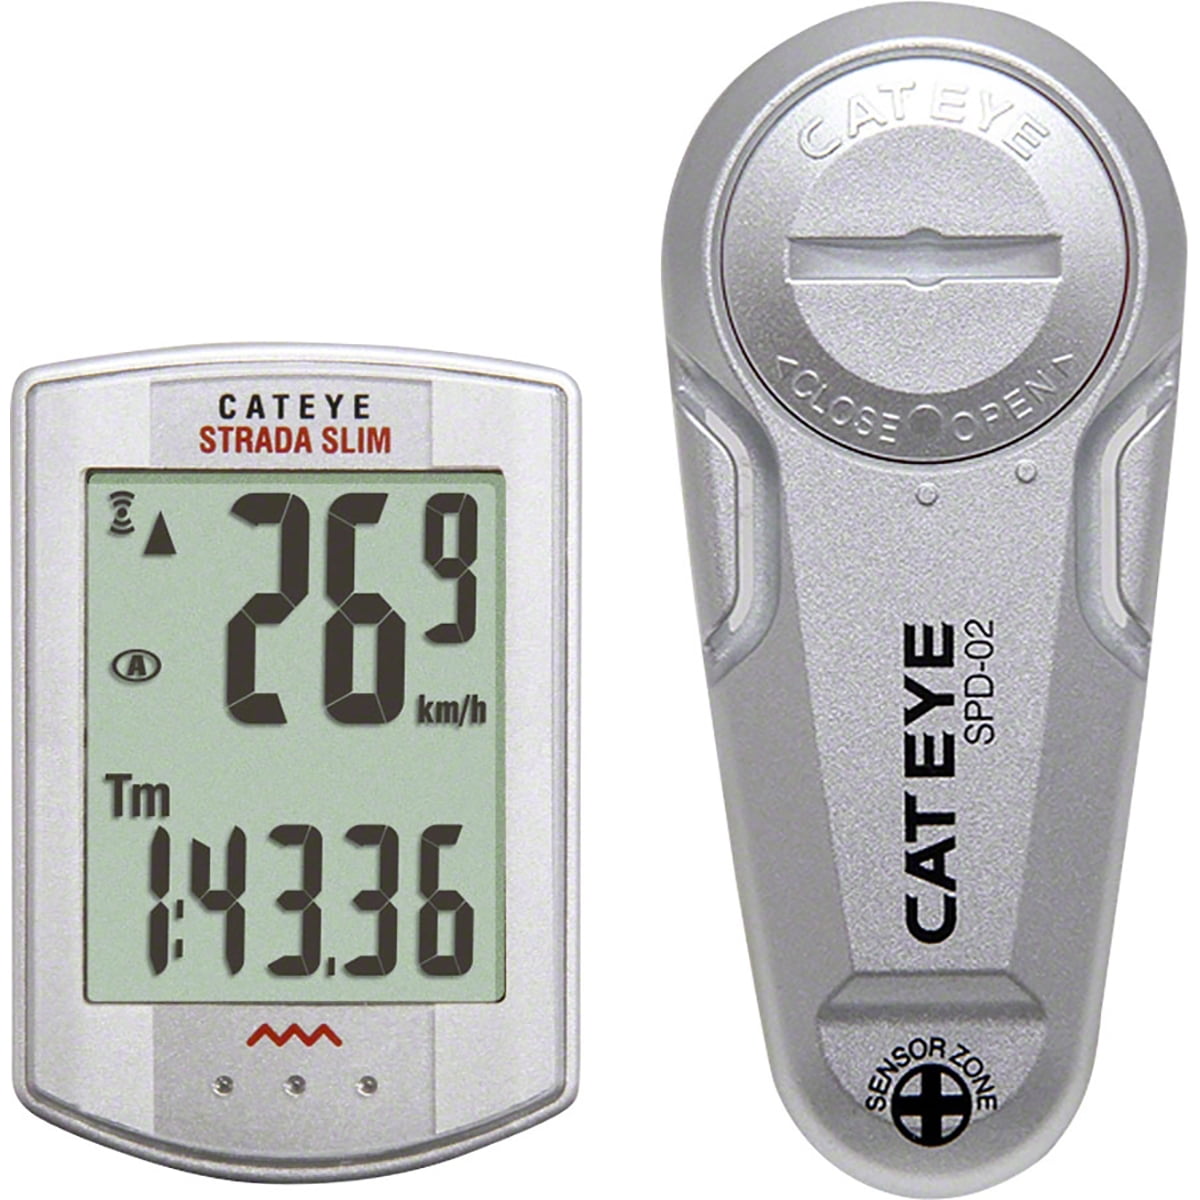 New Cateye Strada Slim Cycling Computer Speedometer CC-RD310W Wireless White 